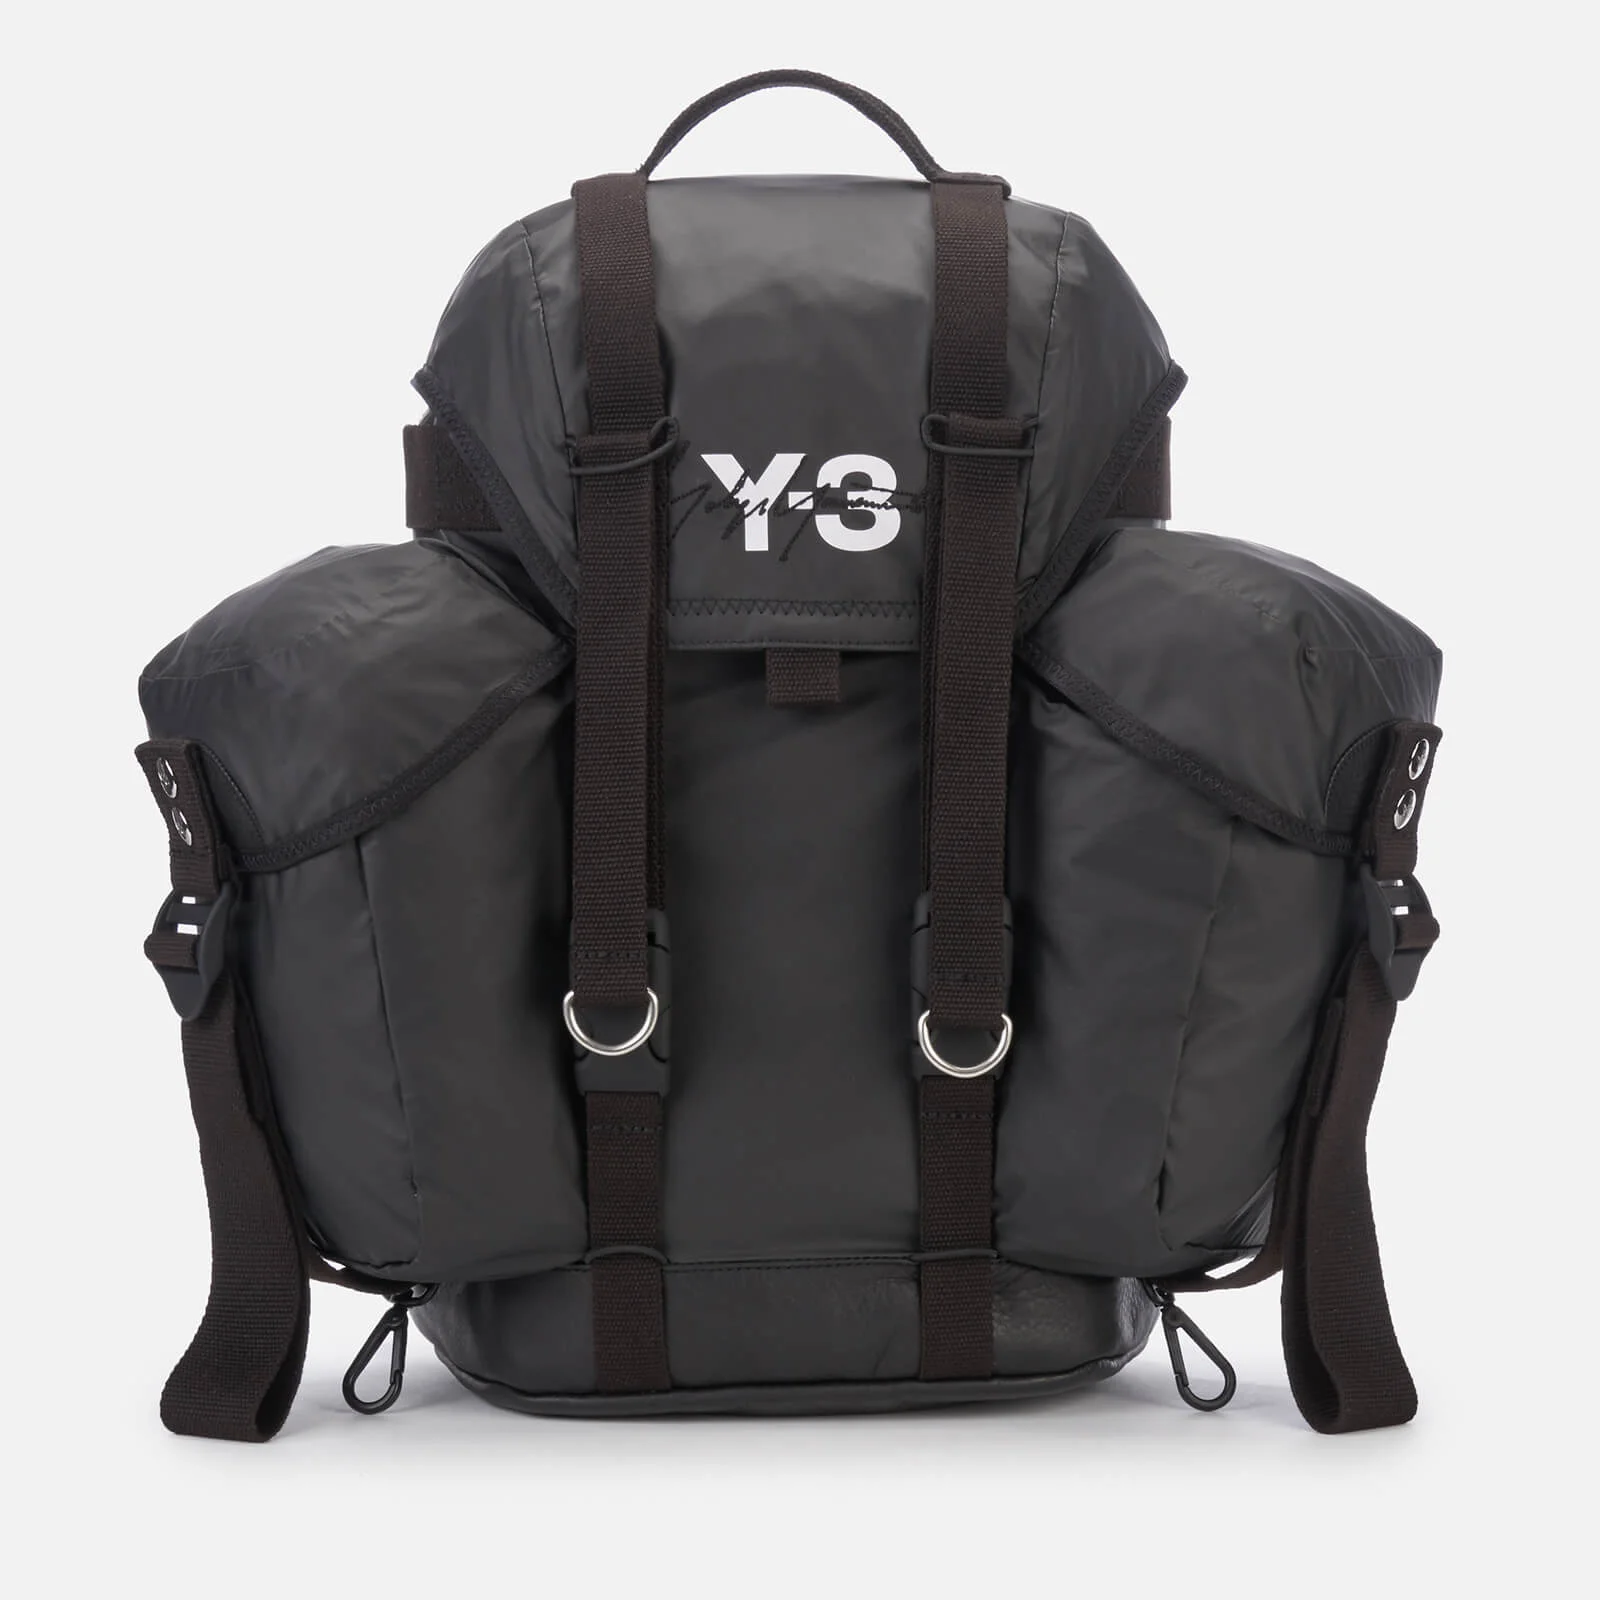 Y-3 XS Utility Bag - Black Image 1